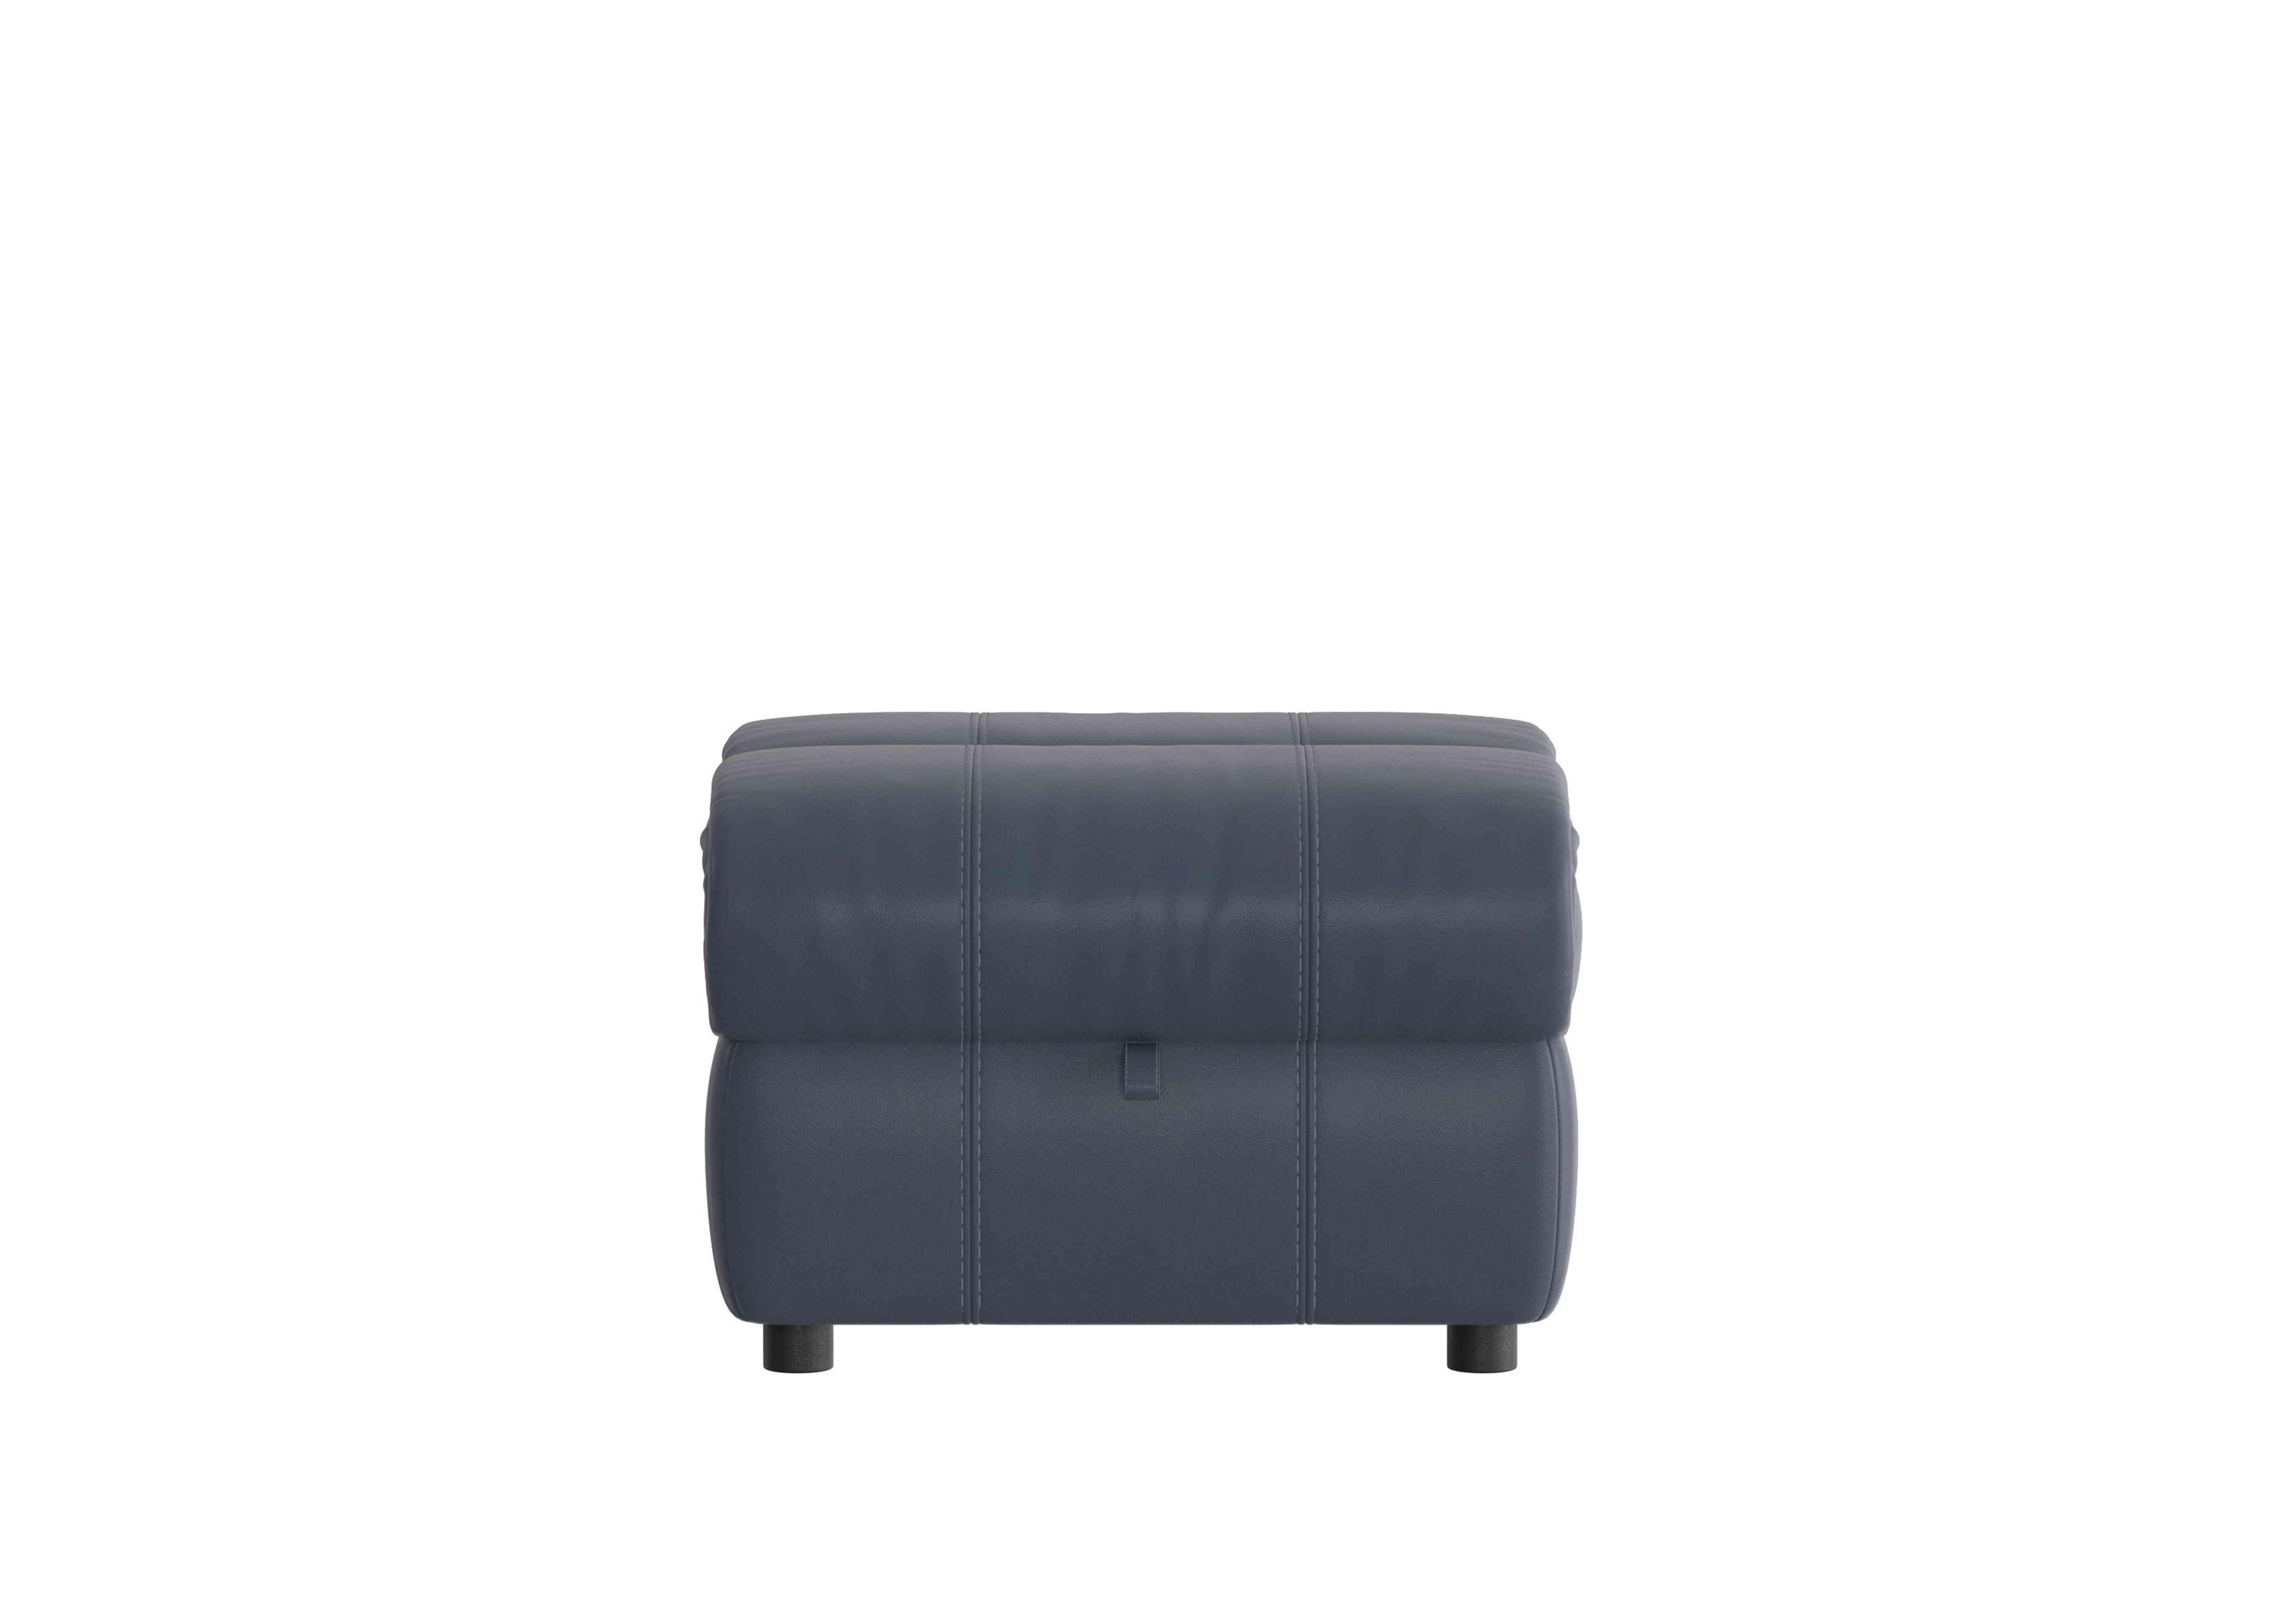 Link Leather Footstool in Bv-313e Ocean Blue on Furniture Village